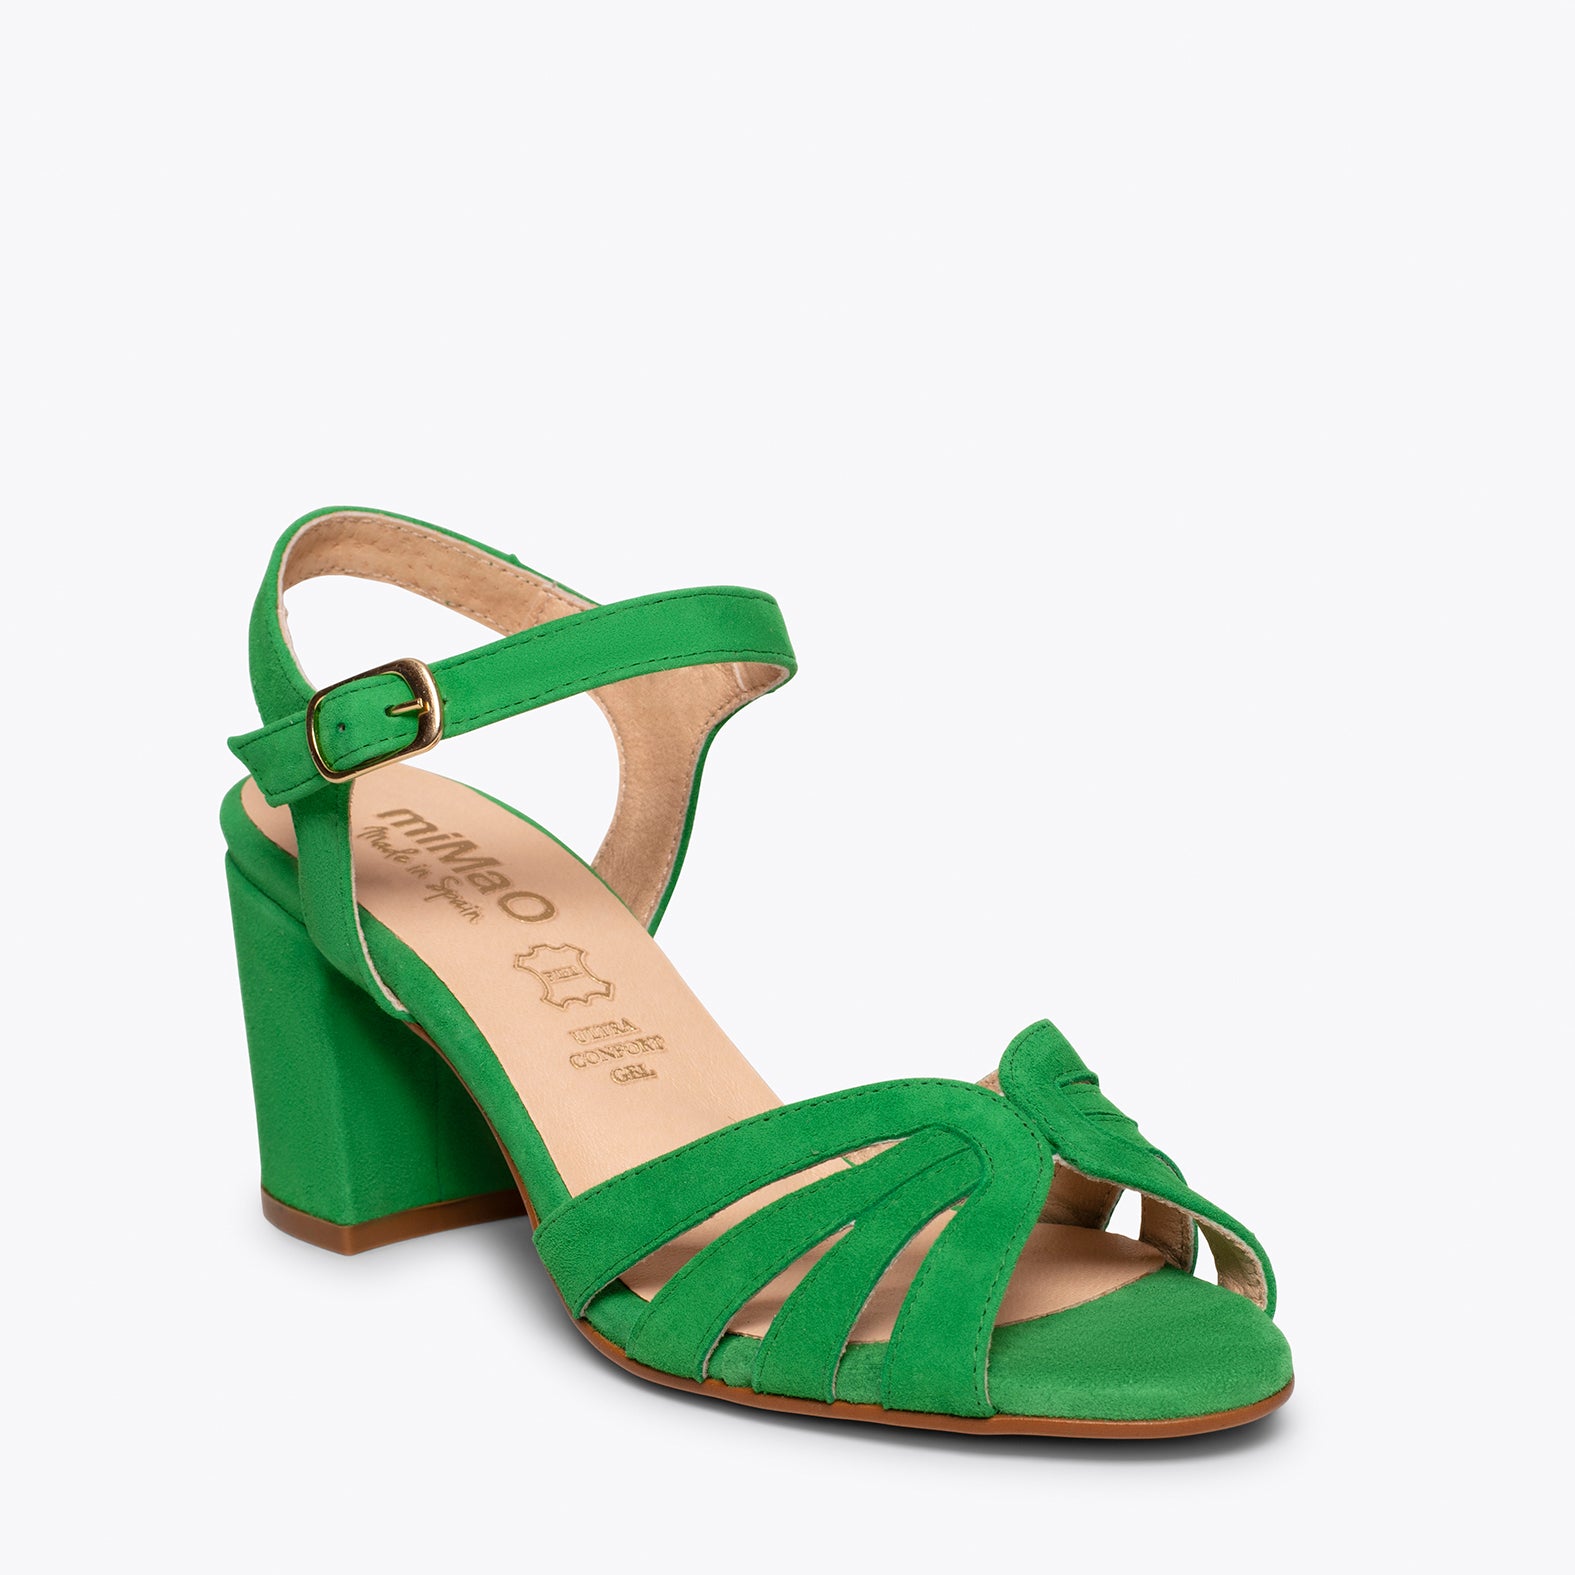 Sandalias de Mujer | tacón ancho Verdes | Calzado Mujer – miMaO ShopOnline